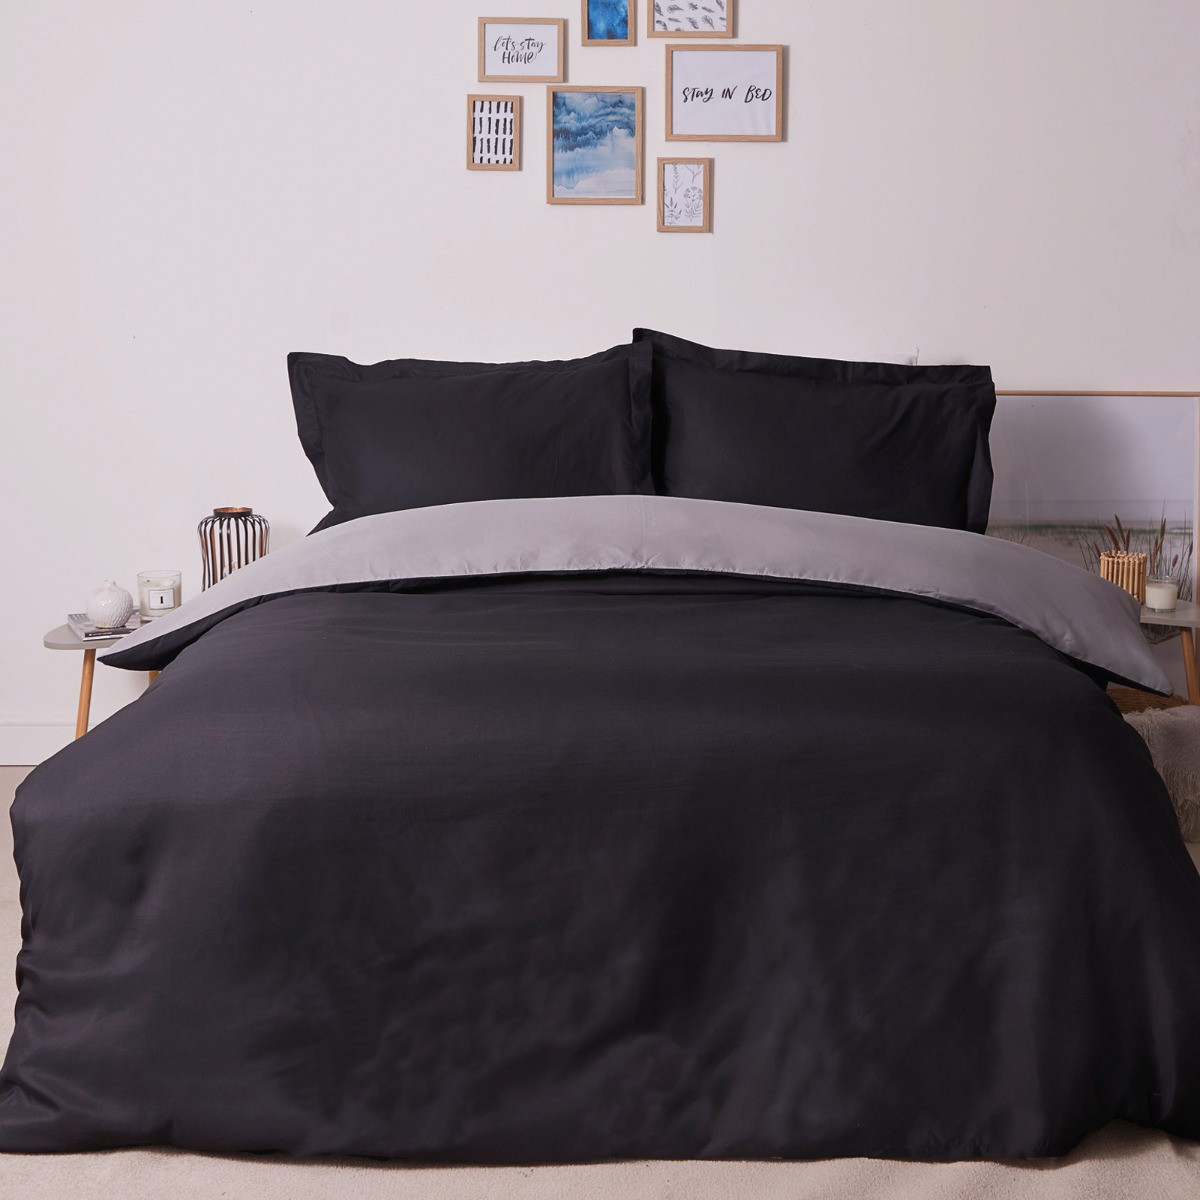 Brentfords Plain Dye Duvet Cover Set with Oxford Pillowcase - Grey / Black>